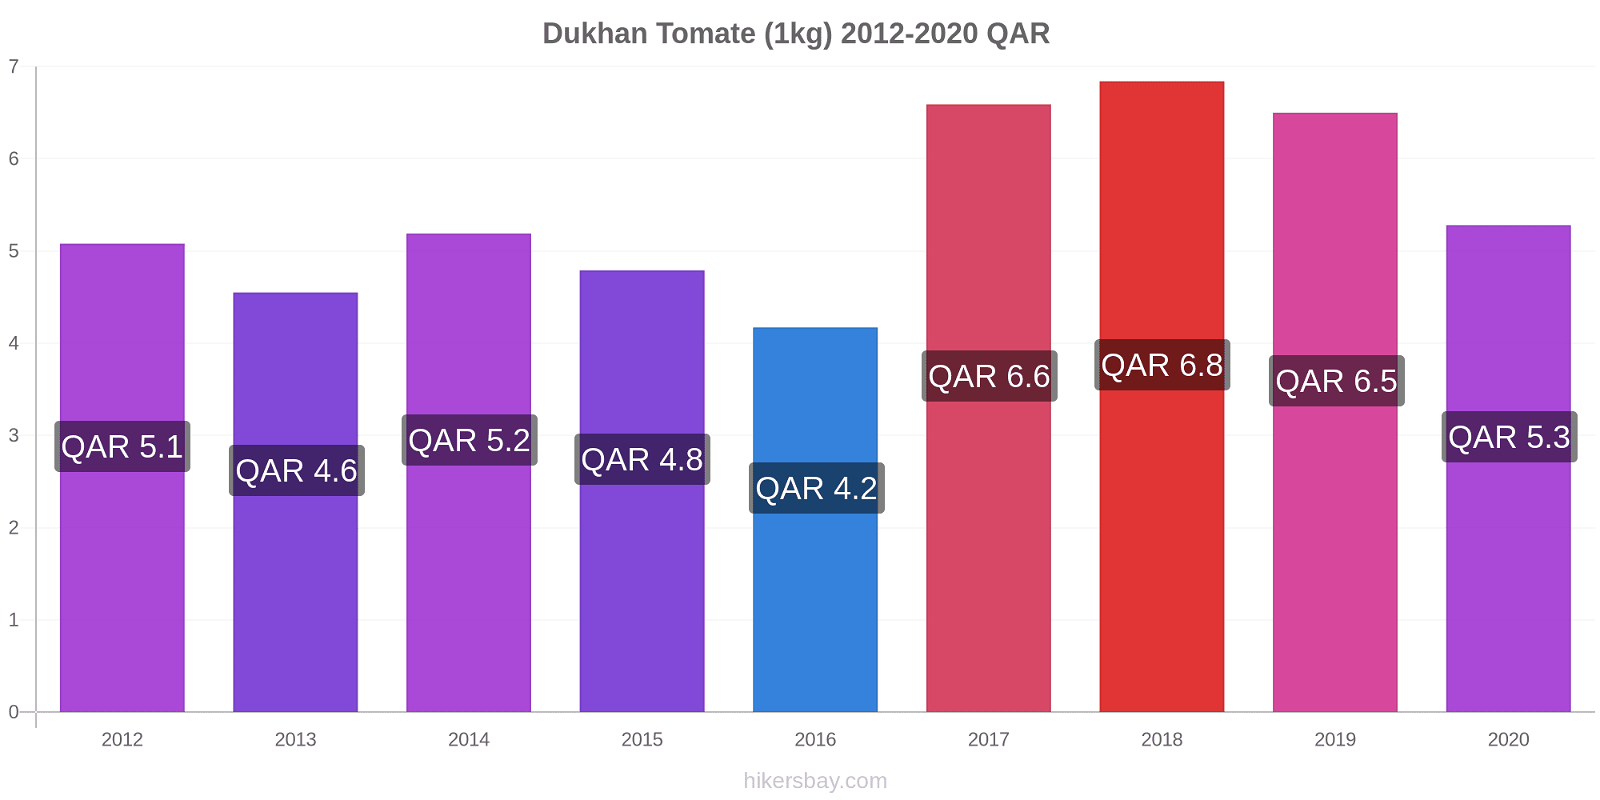 Dukhan changements de prix Tomate (1kg) hikersbay.com